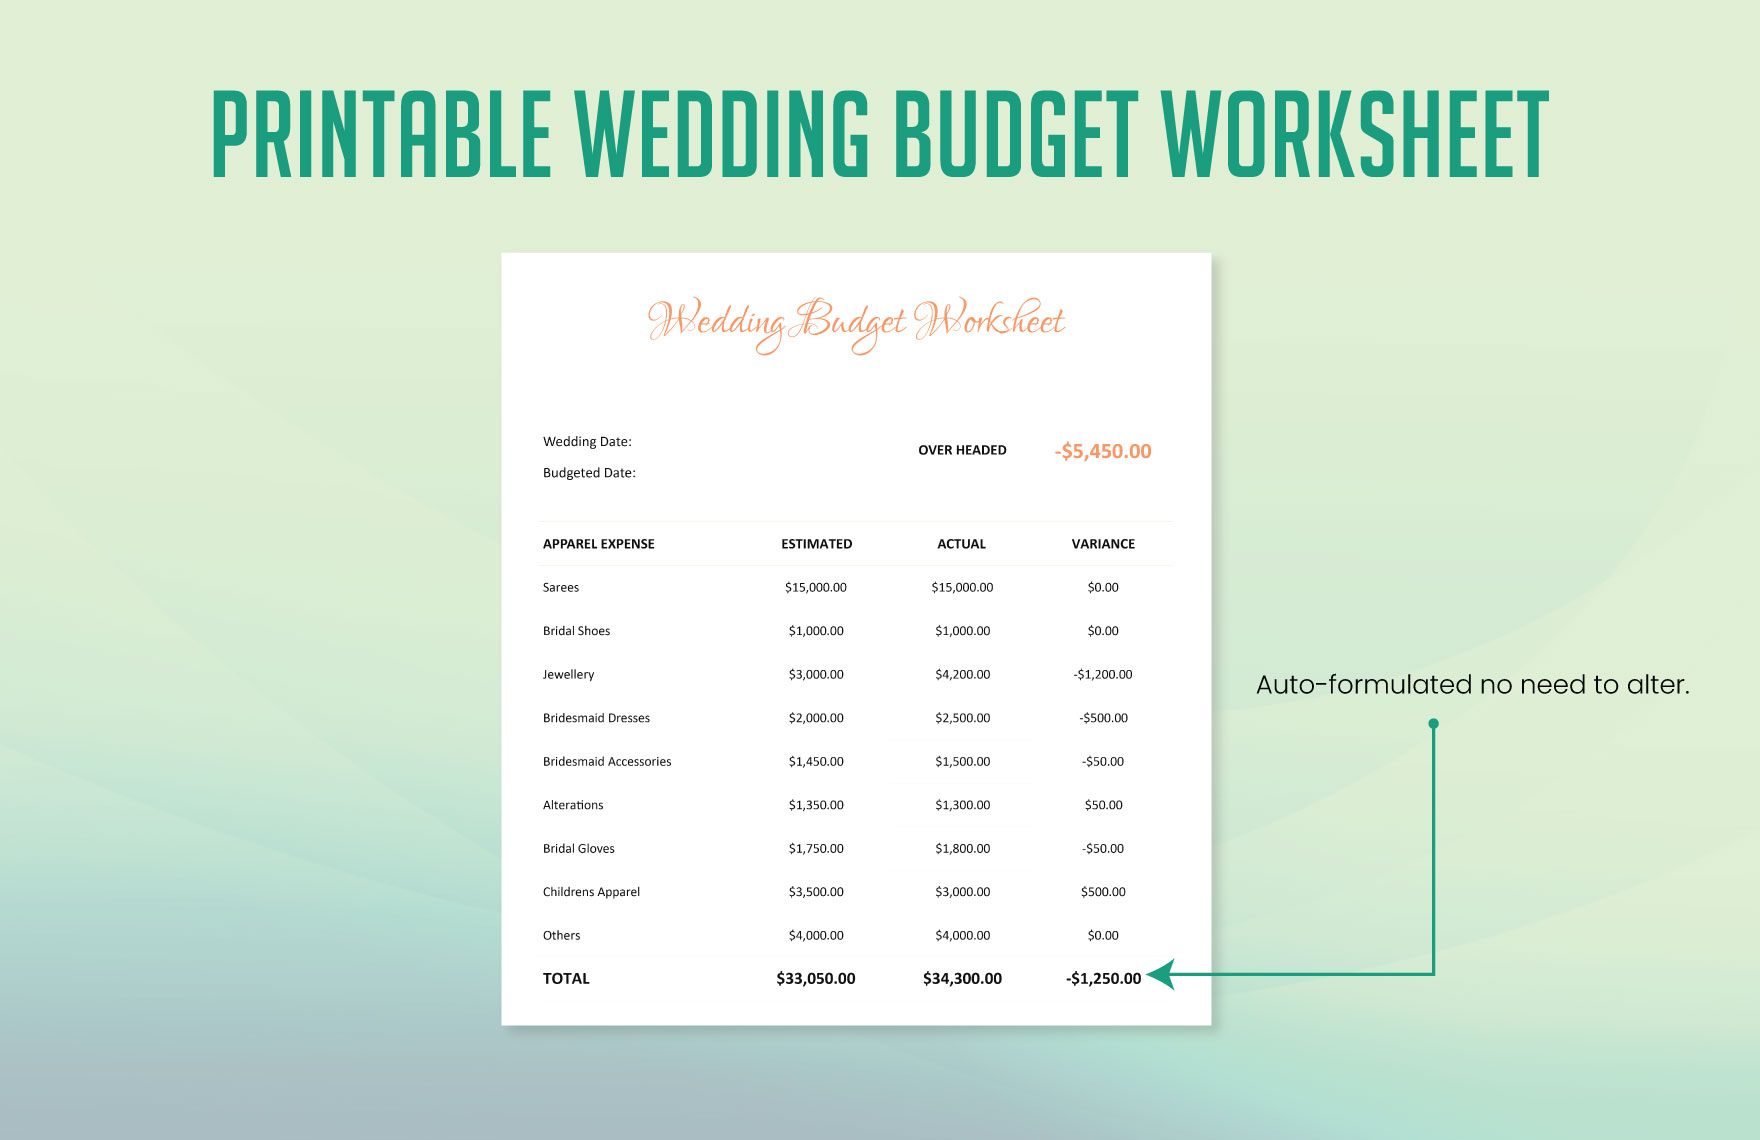 Printable Wedding Budget Worksheet Template